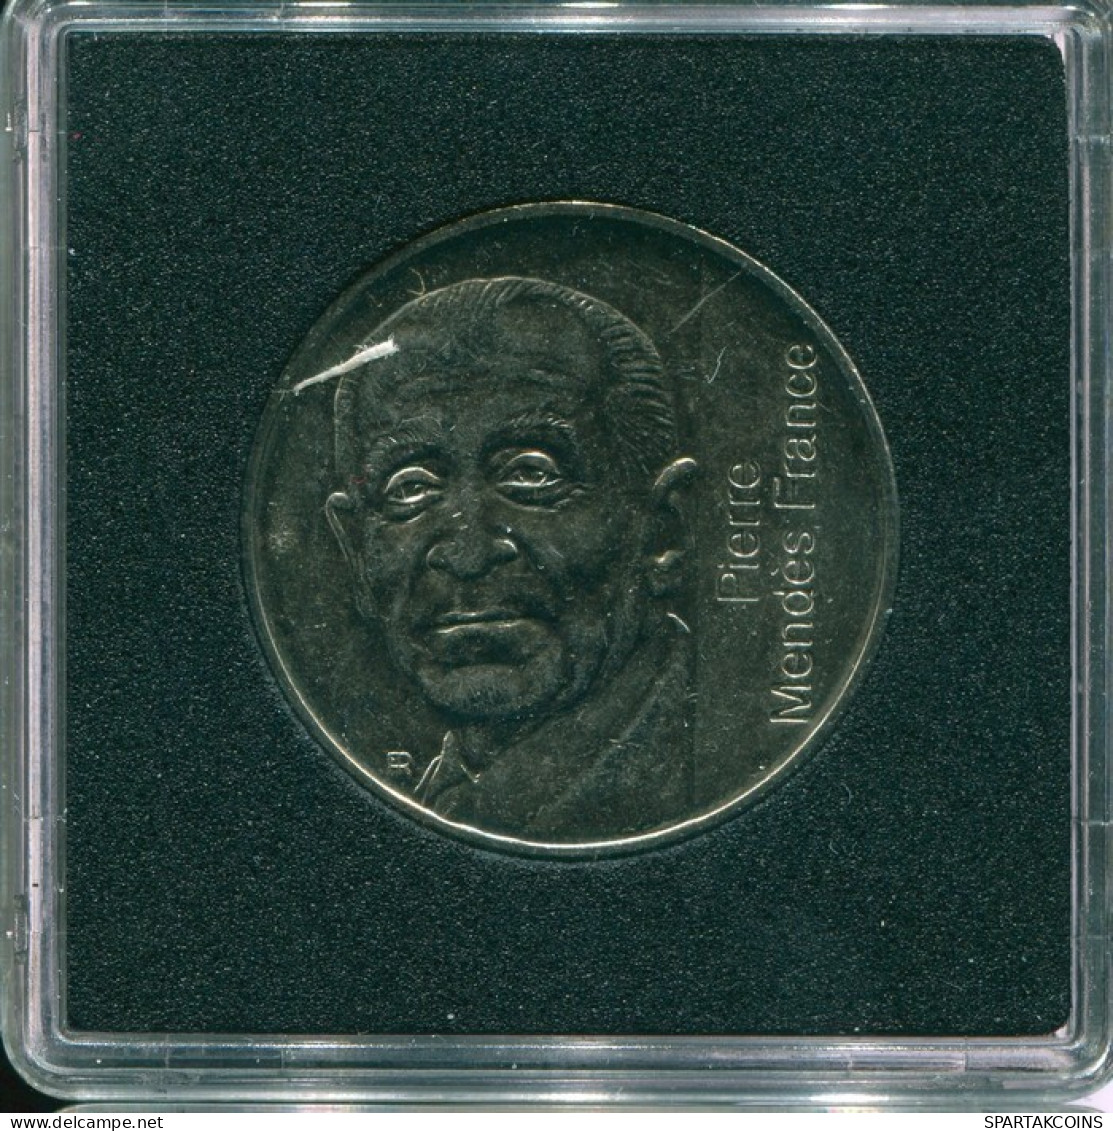 5 FRANCS 1992 FRANCE Coin PIERRE MENDES FRANCE Coin AUNC #FR1109.4.U.A - 5 Francs